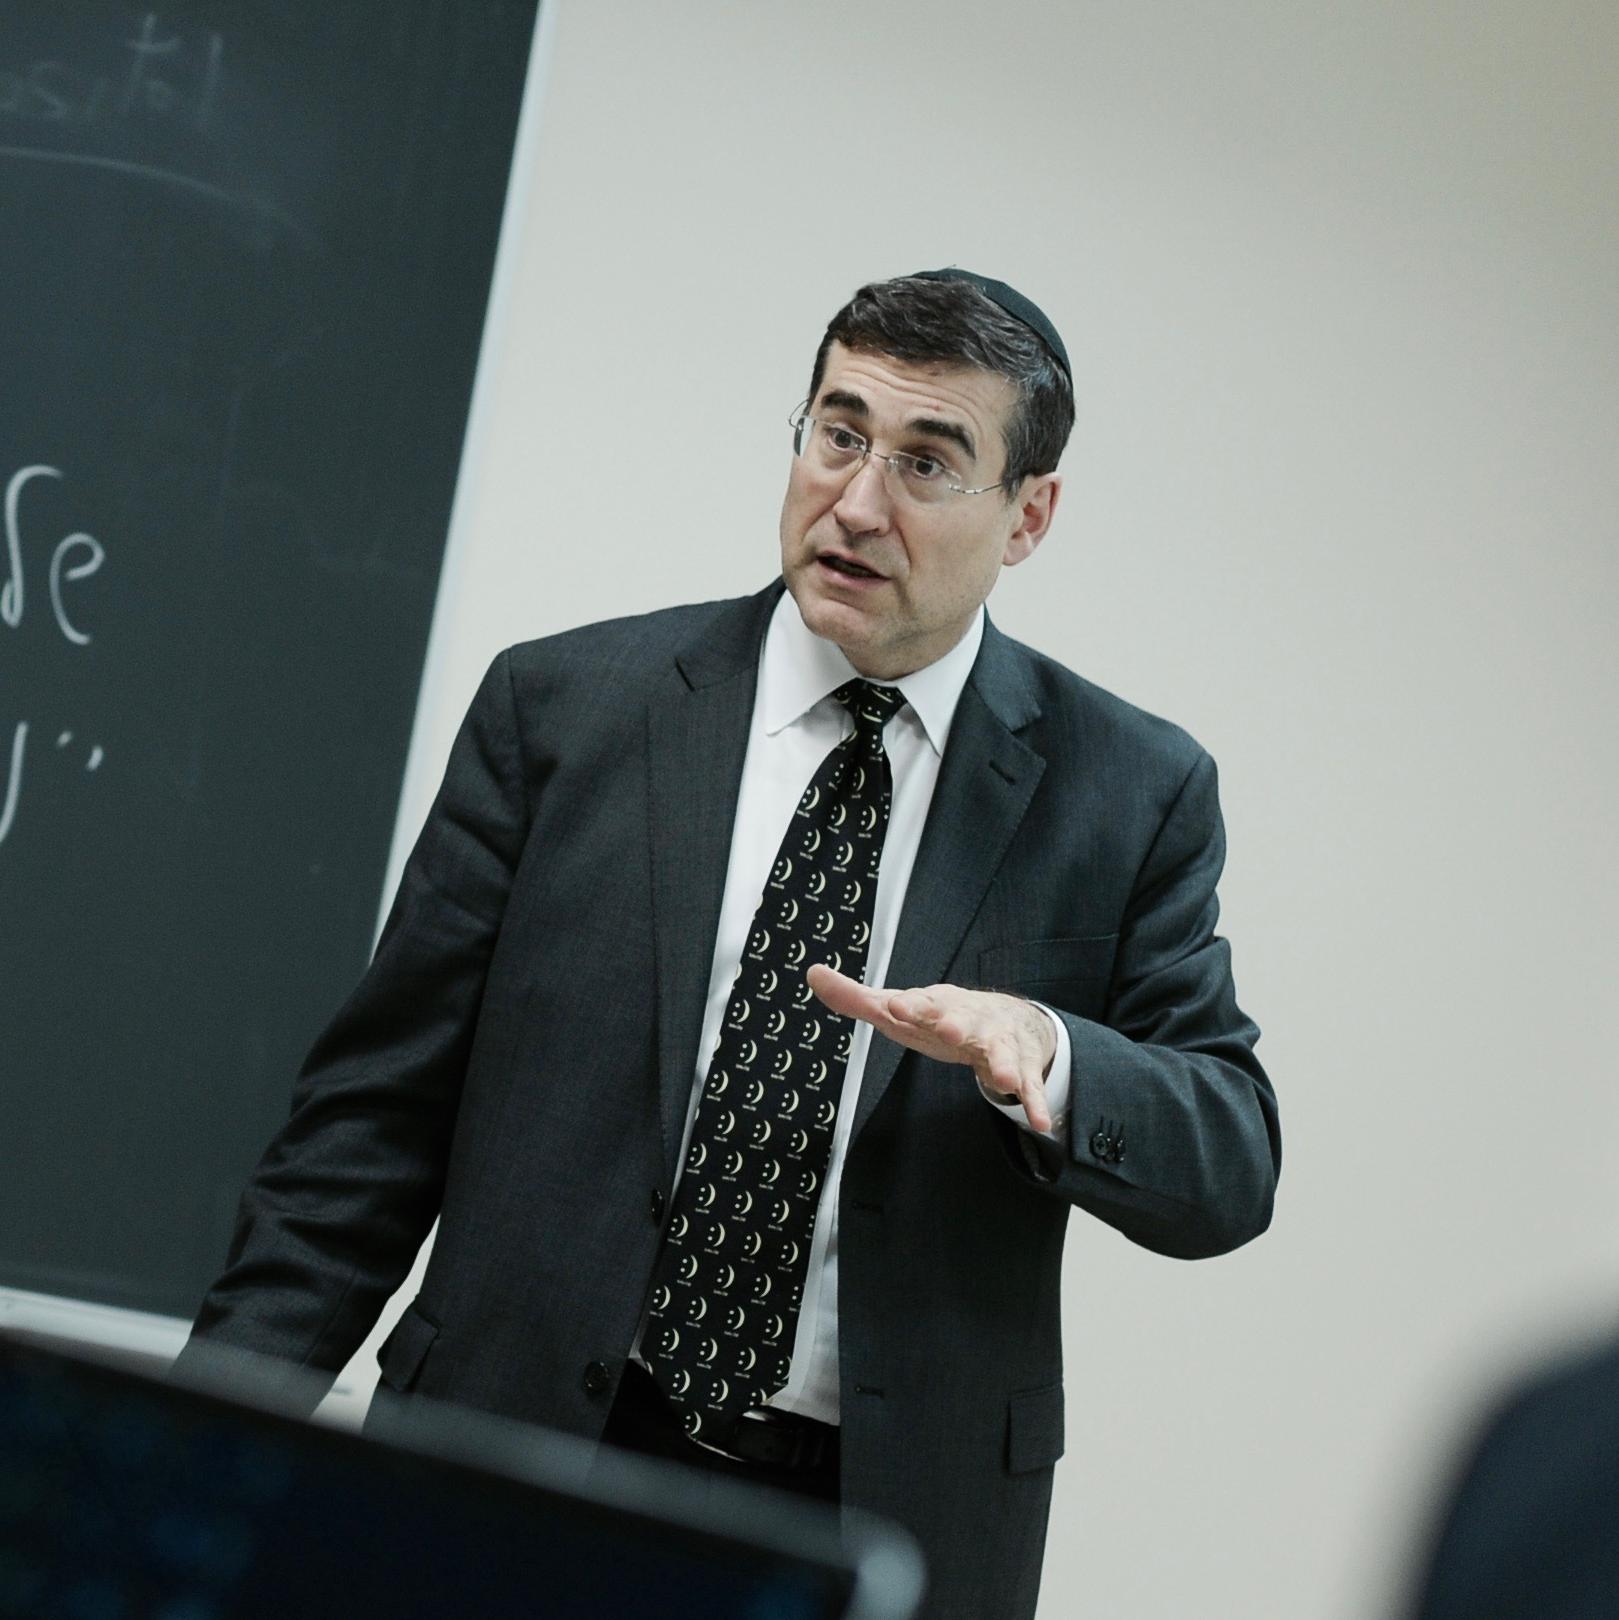 Rabbi Dr. Shmuel Klammer, adjunct professor at the Graduate School of Jewish Studies